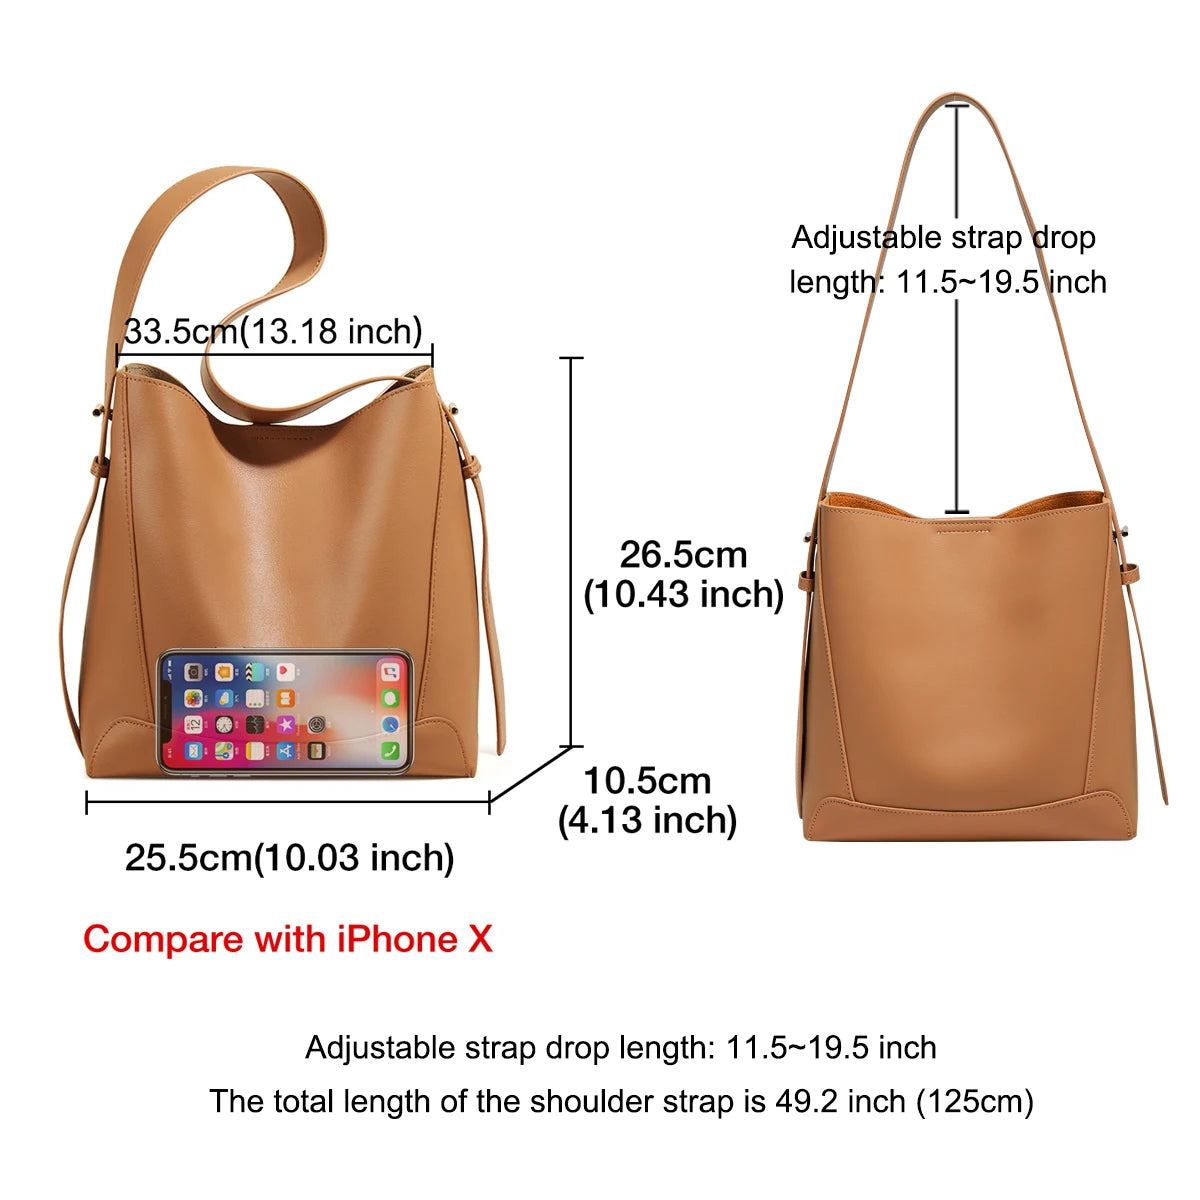 FOXER Lady Fashion Retro Shoulder Bag Large Capacity